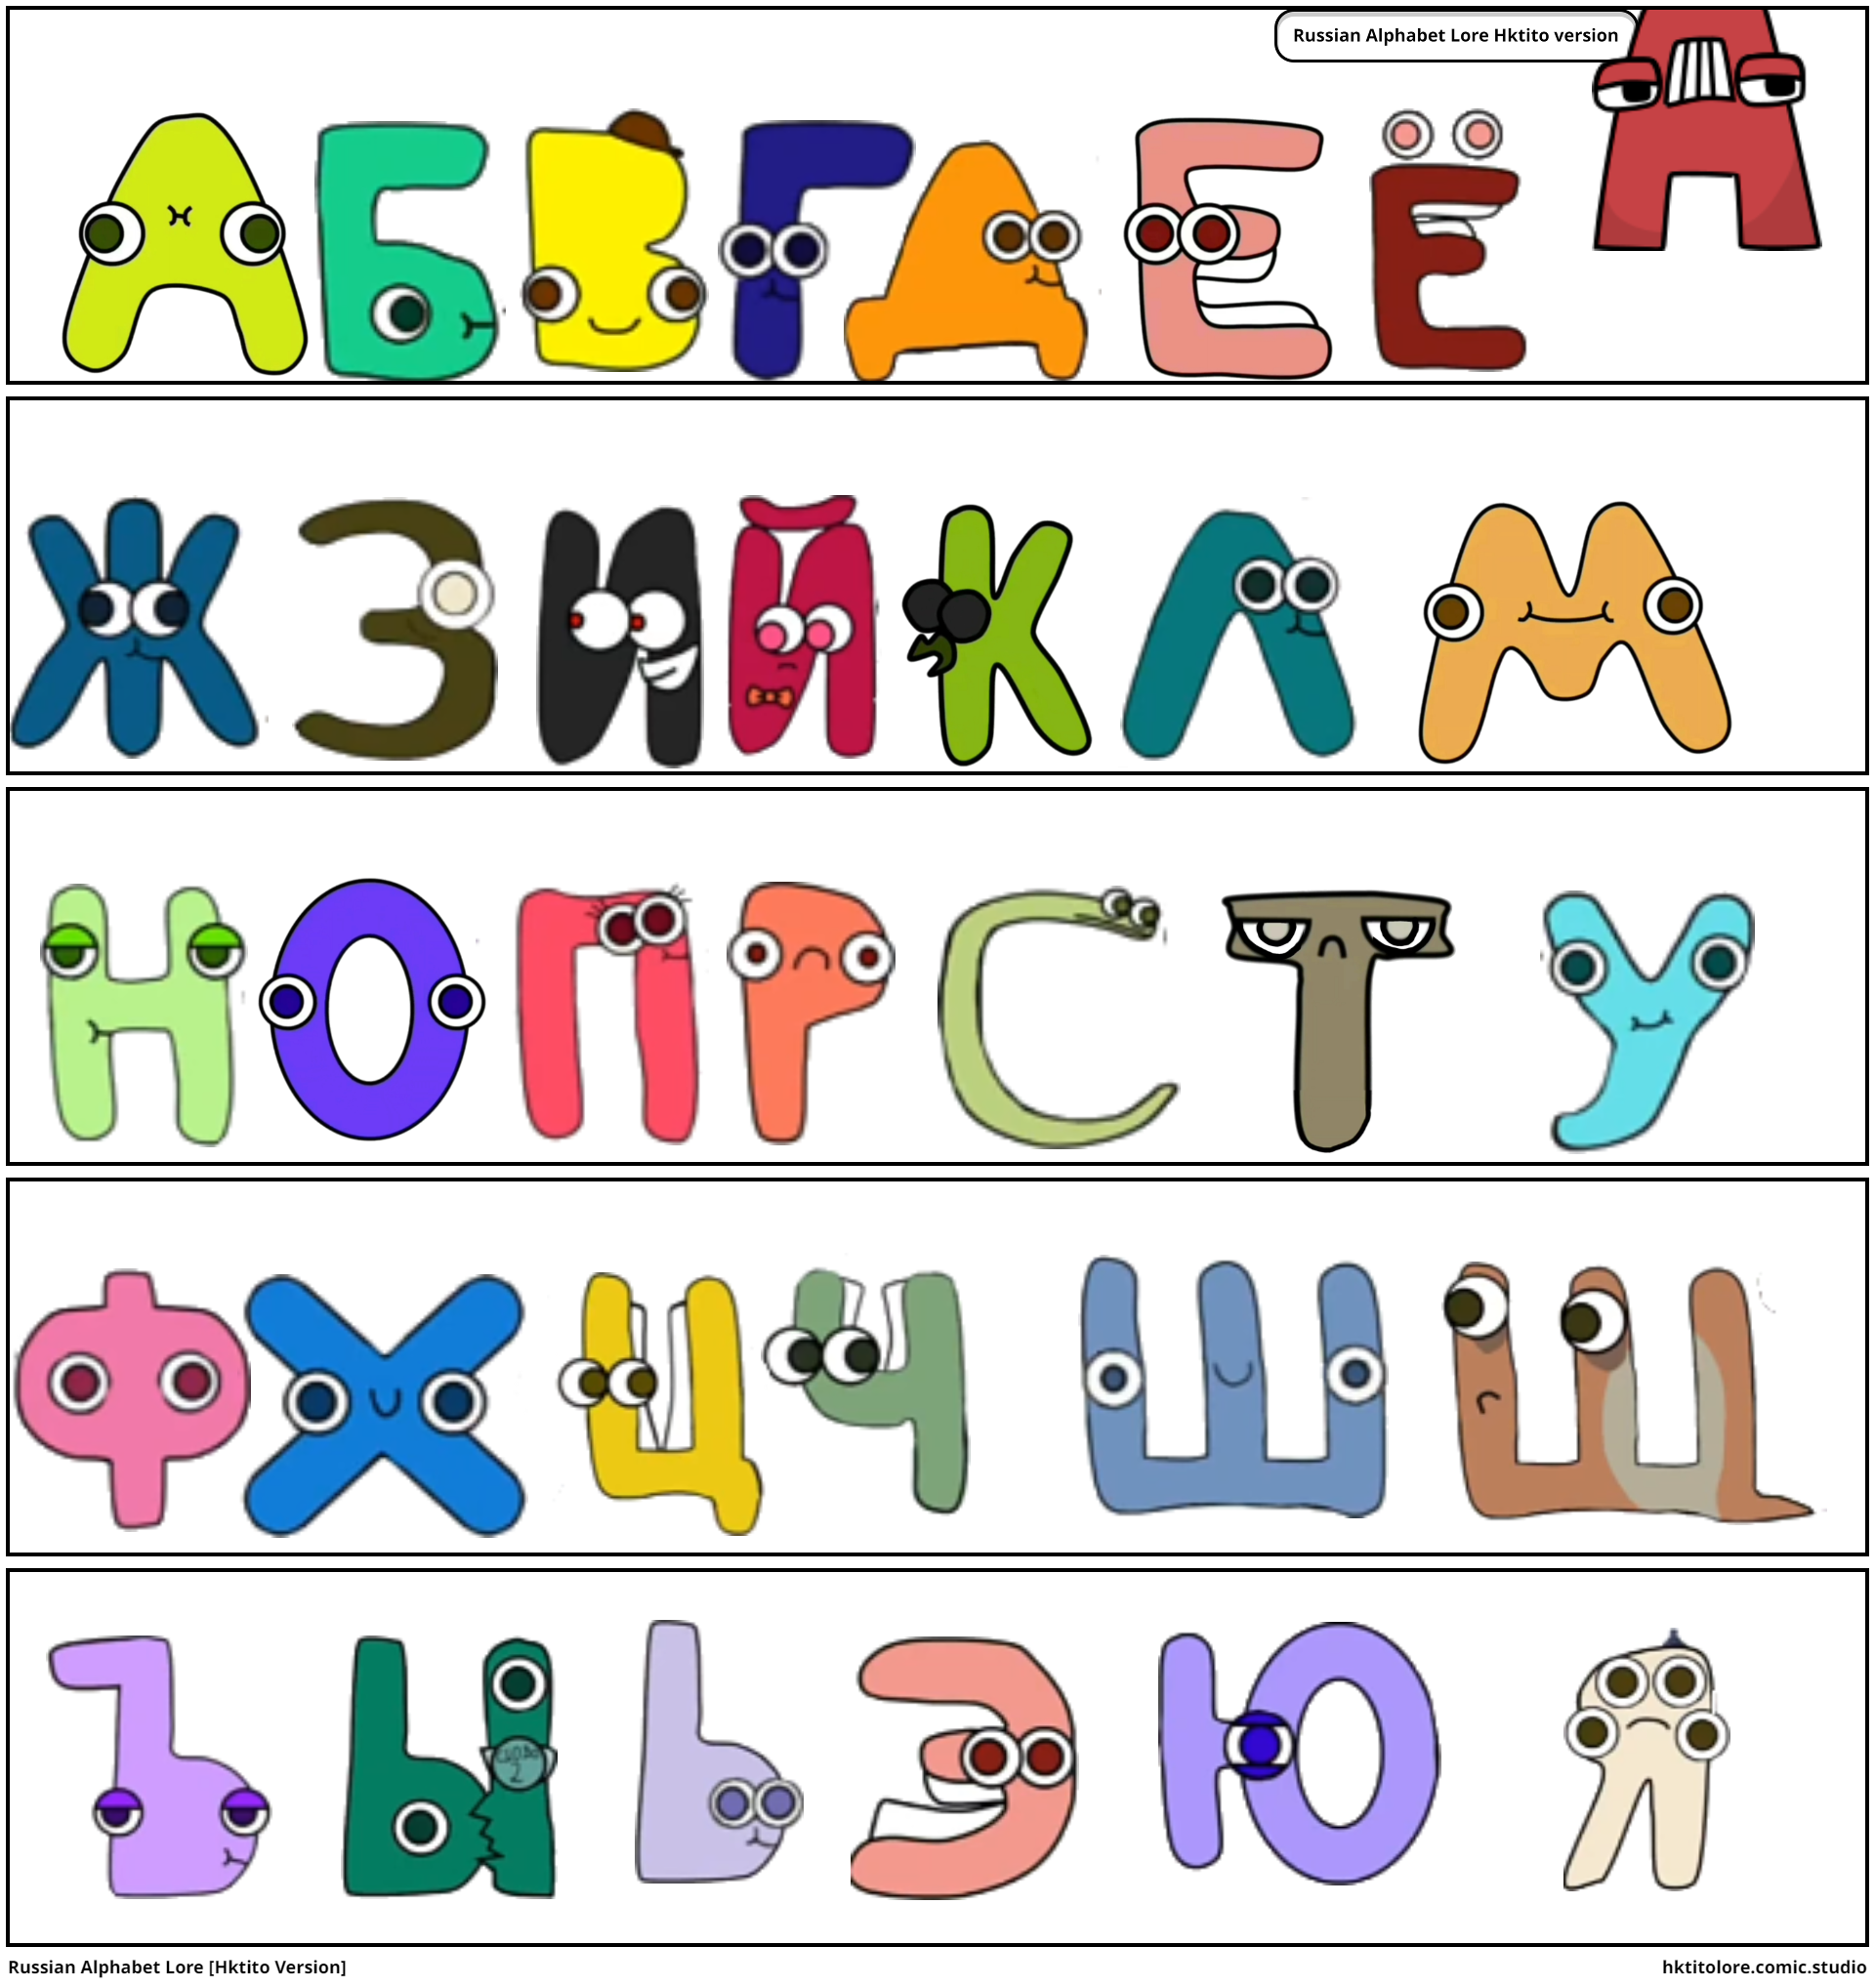 Russian Alphabet Lore Big and Small - Comic Studio